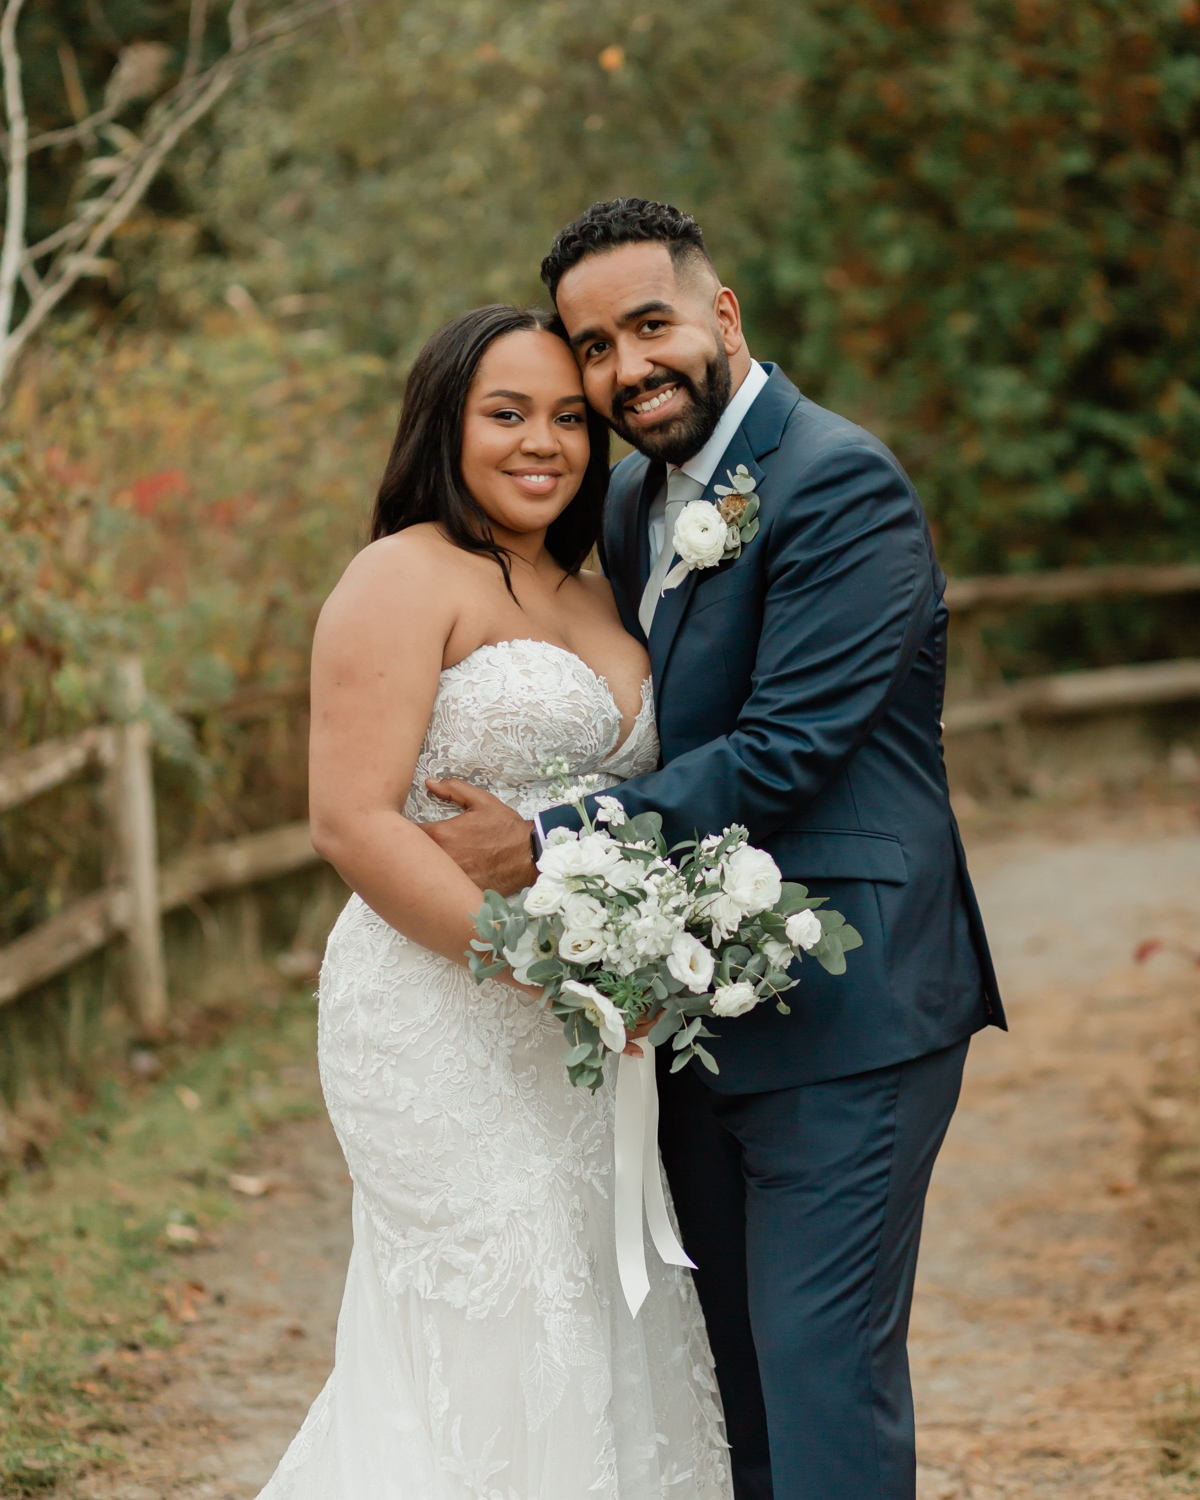 Kenya and Aaron get married at Evergreen Brickworks in Toronto Canada